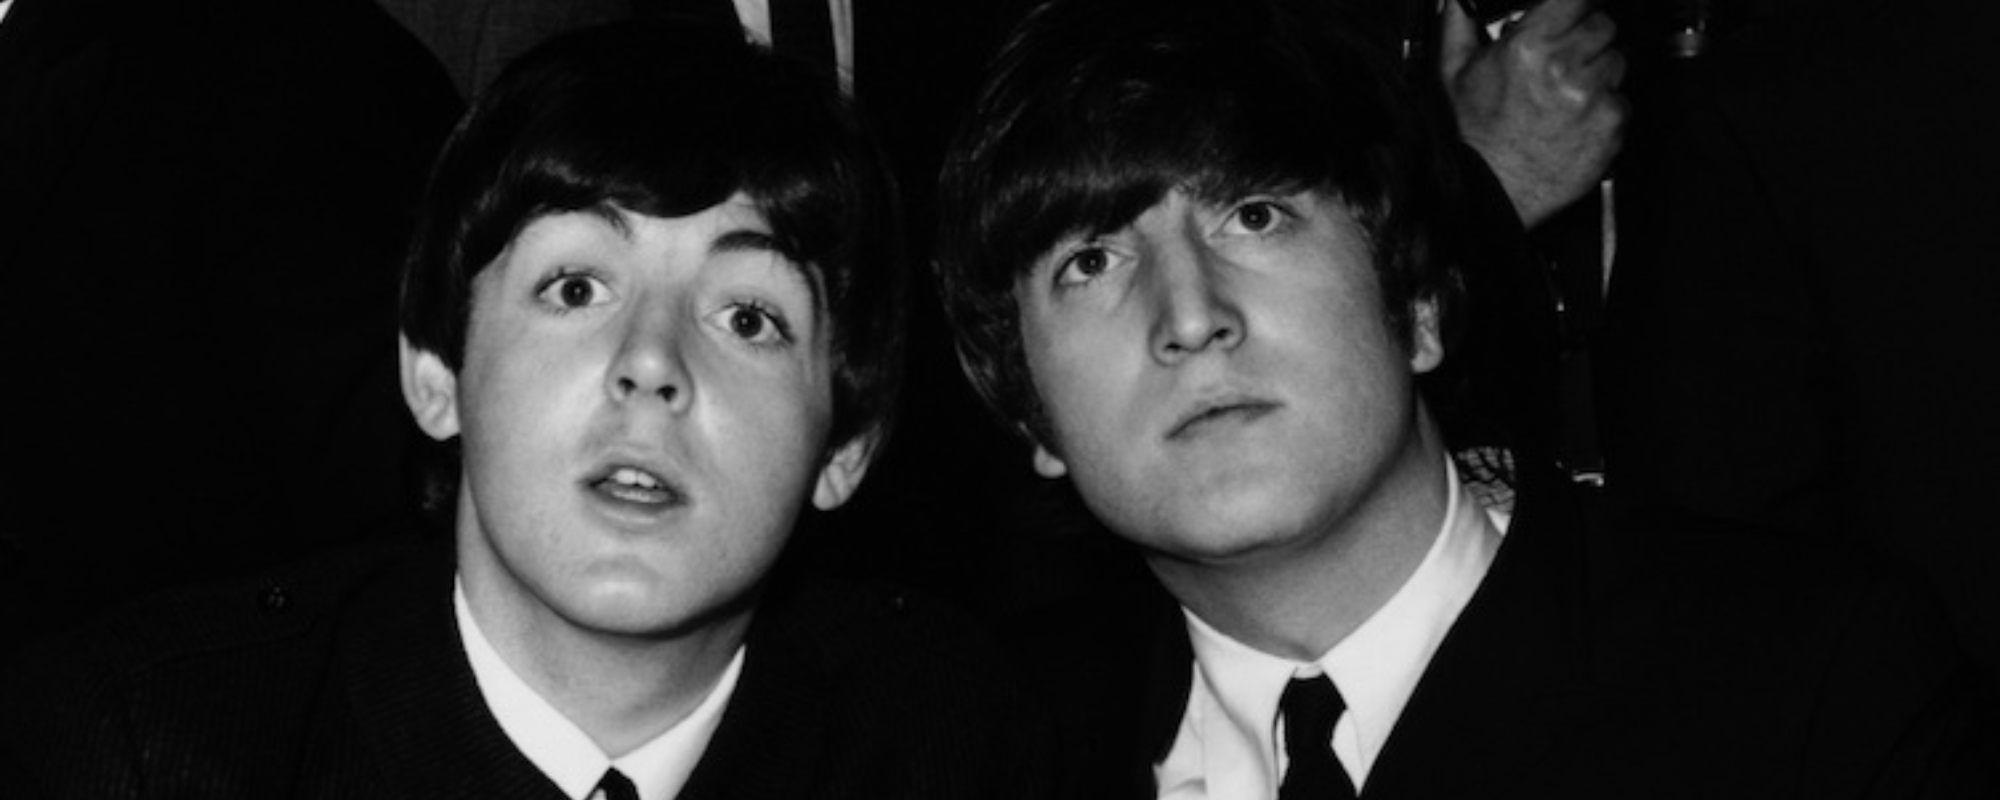 Paul McCartney Looks Back at Friendship with John Lennon in New ‘McCartney: A Life in Lyrics’ Podcast Episode